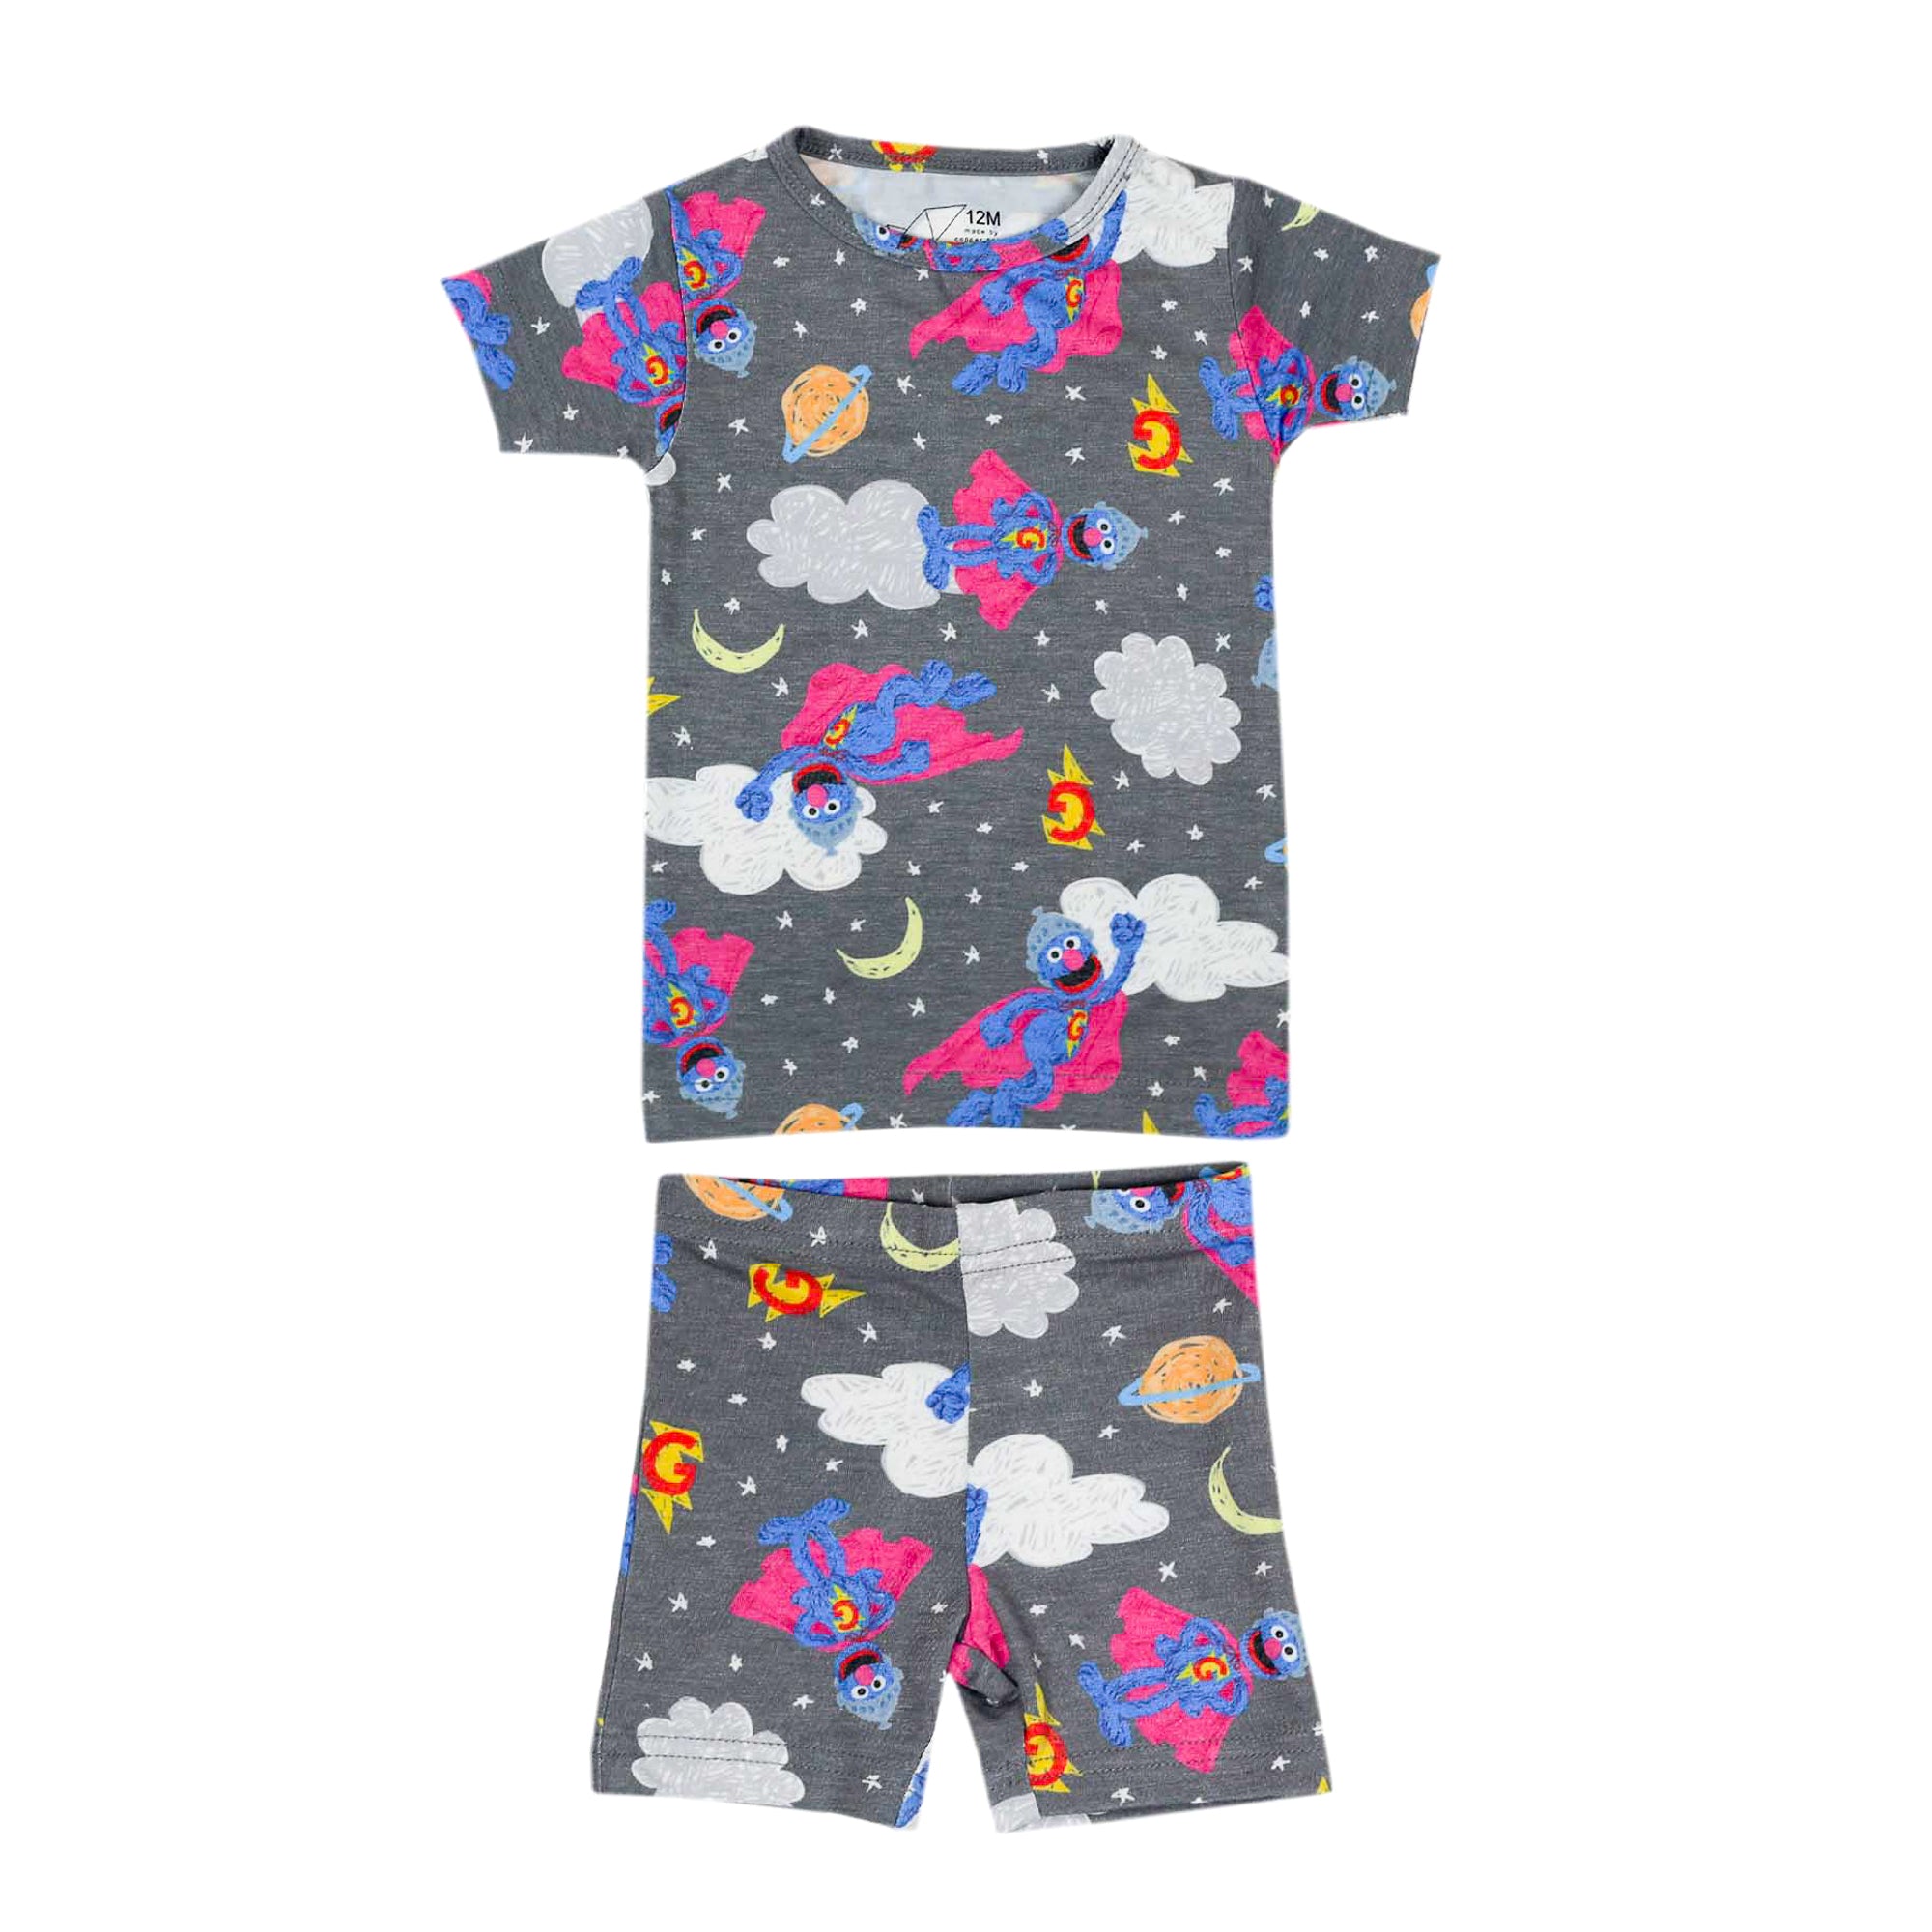 2pc Short Sleeve Pajama Set - Super Grover